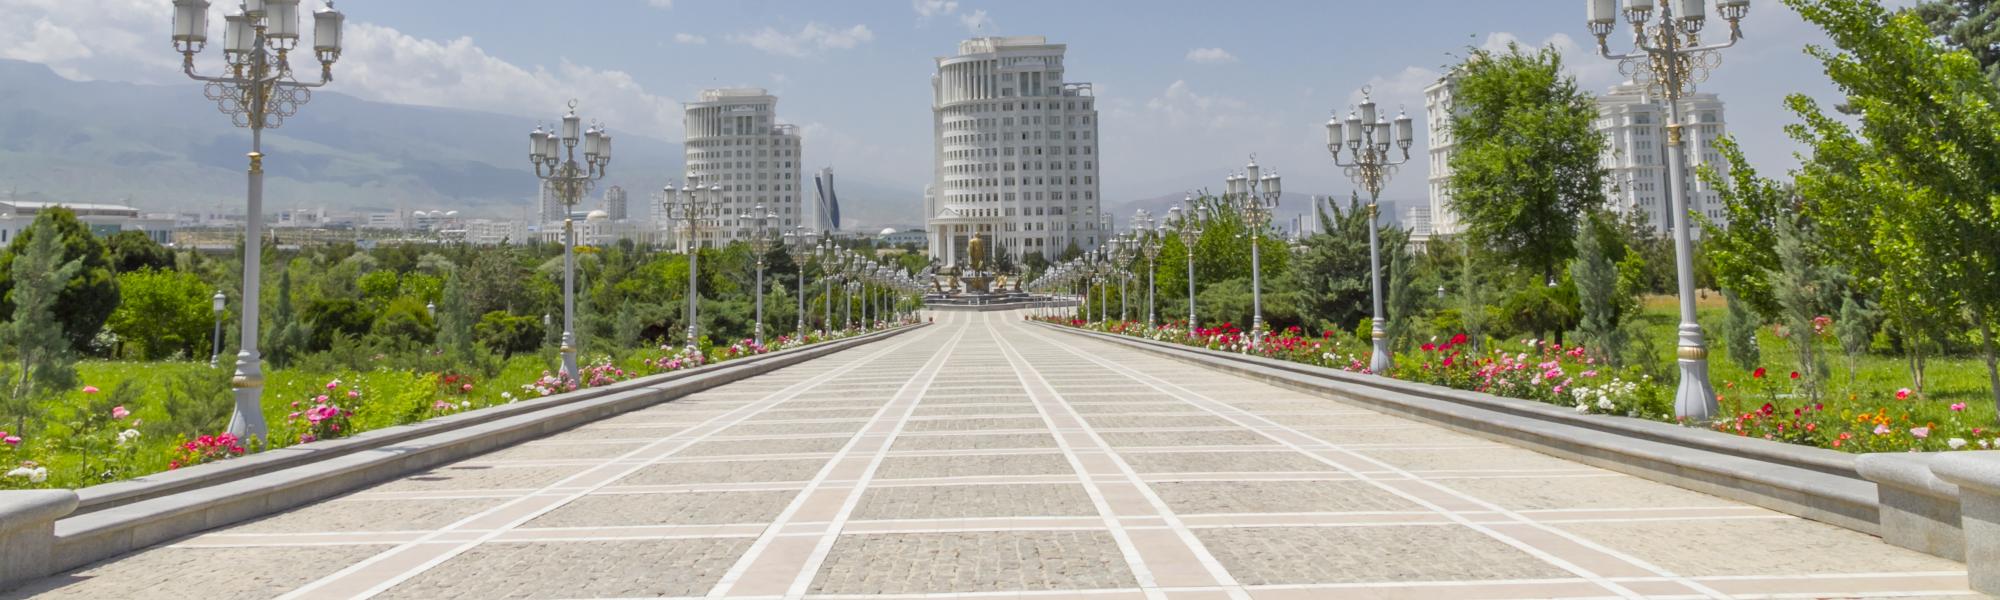 Ашхабад бизнес-форум беломраморная столица